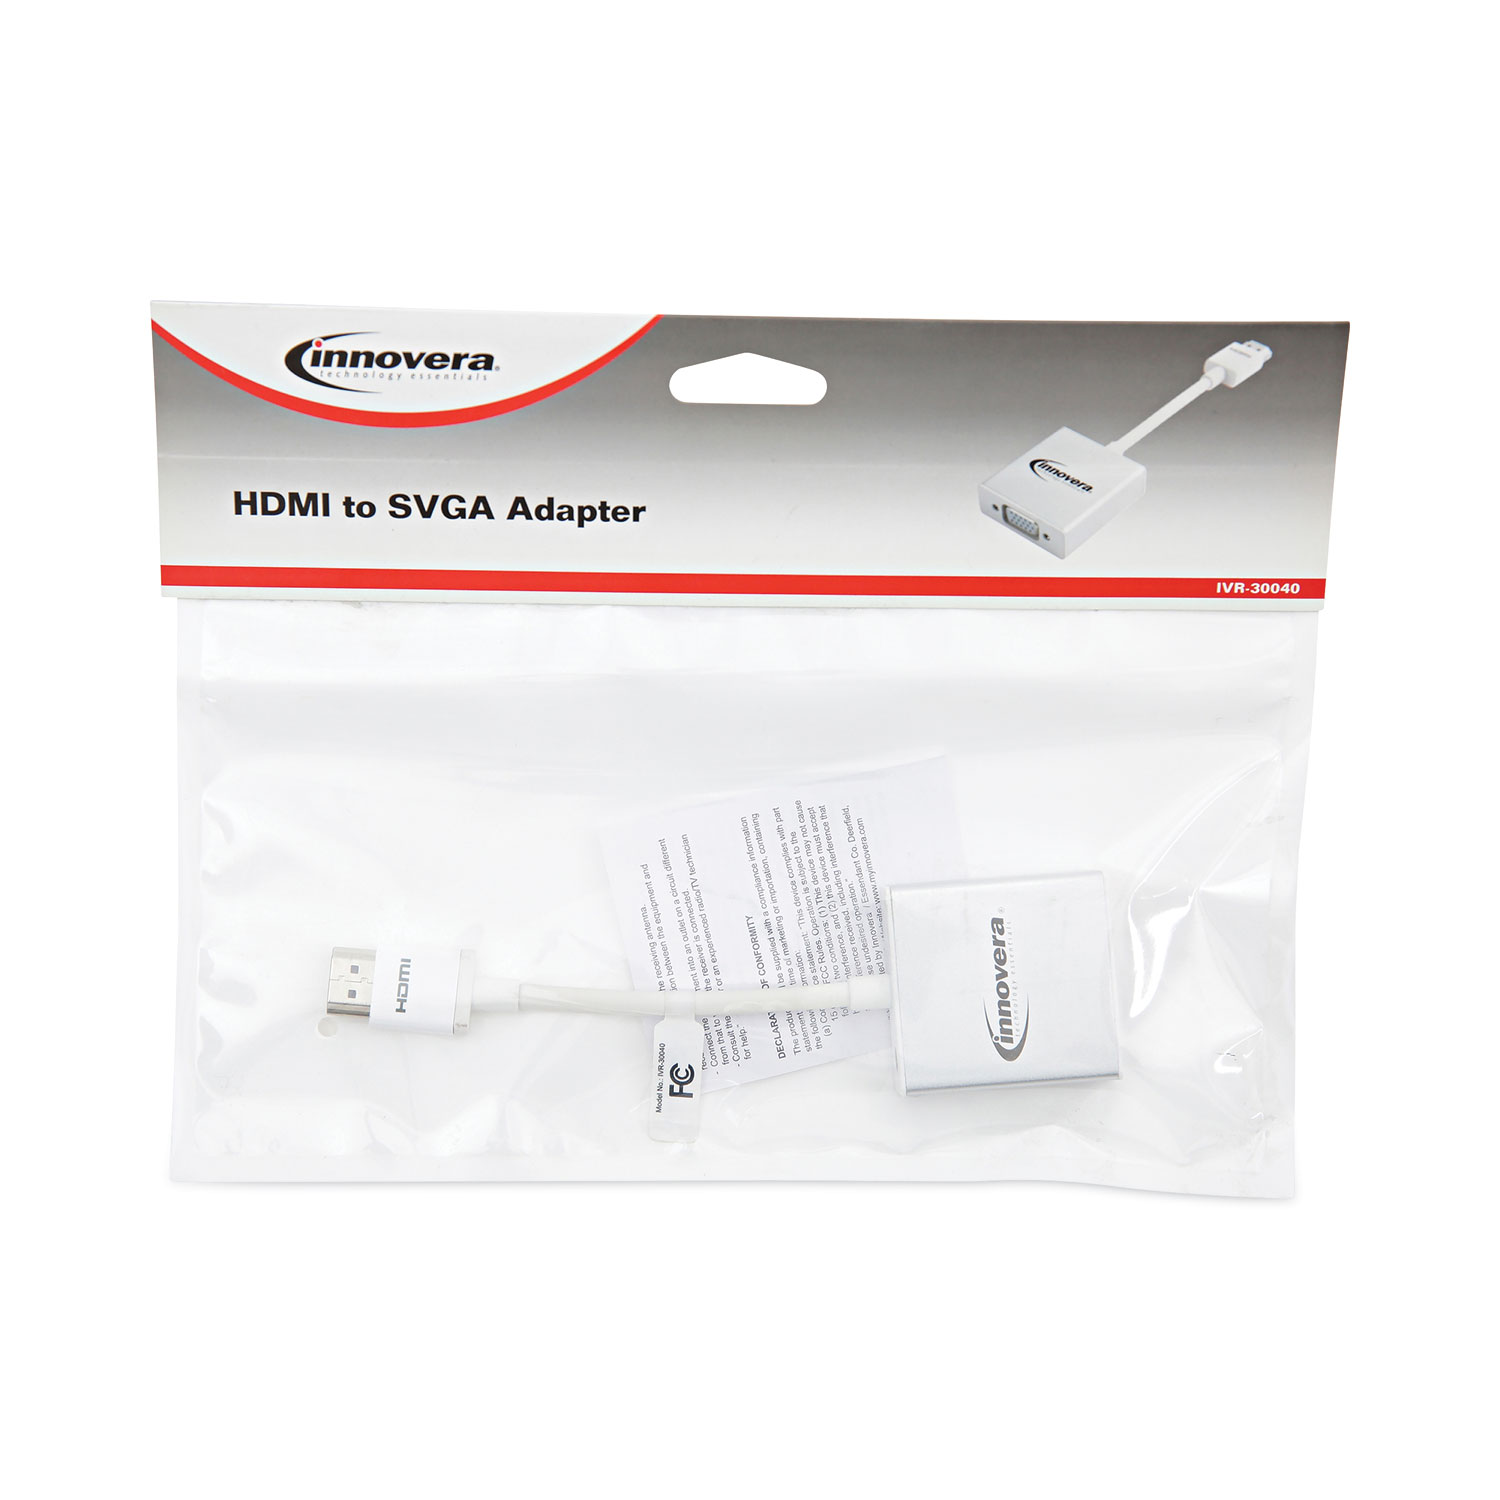 enhed ukendt ozon HDMI to SVGA Adapter, 6", White - Comp-U-Charge Inc